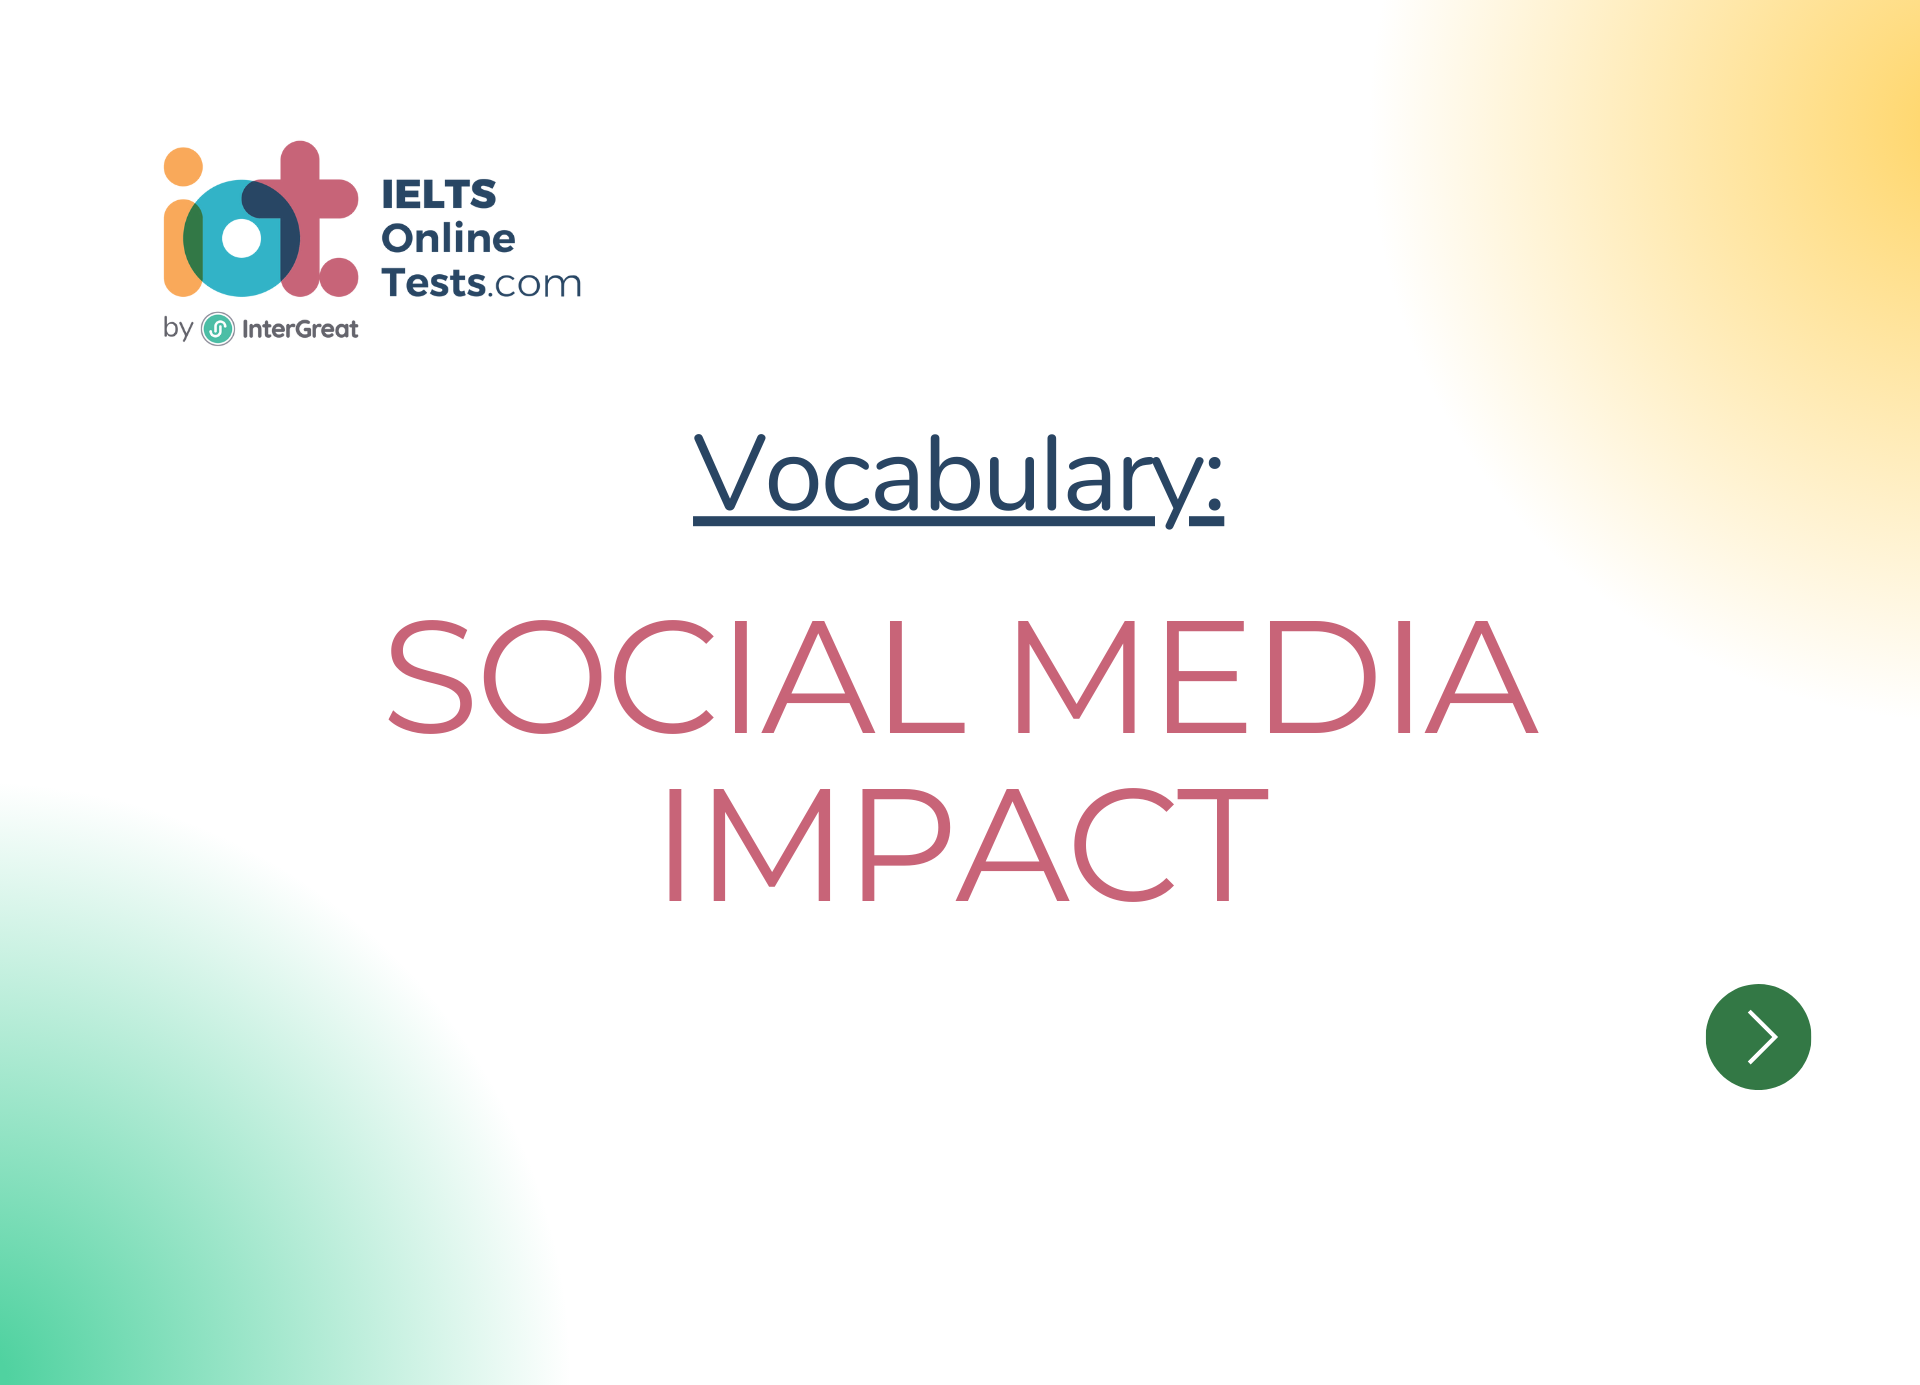 Social media impact